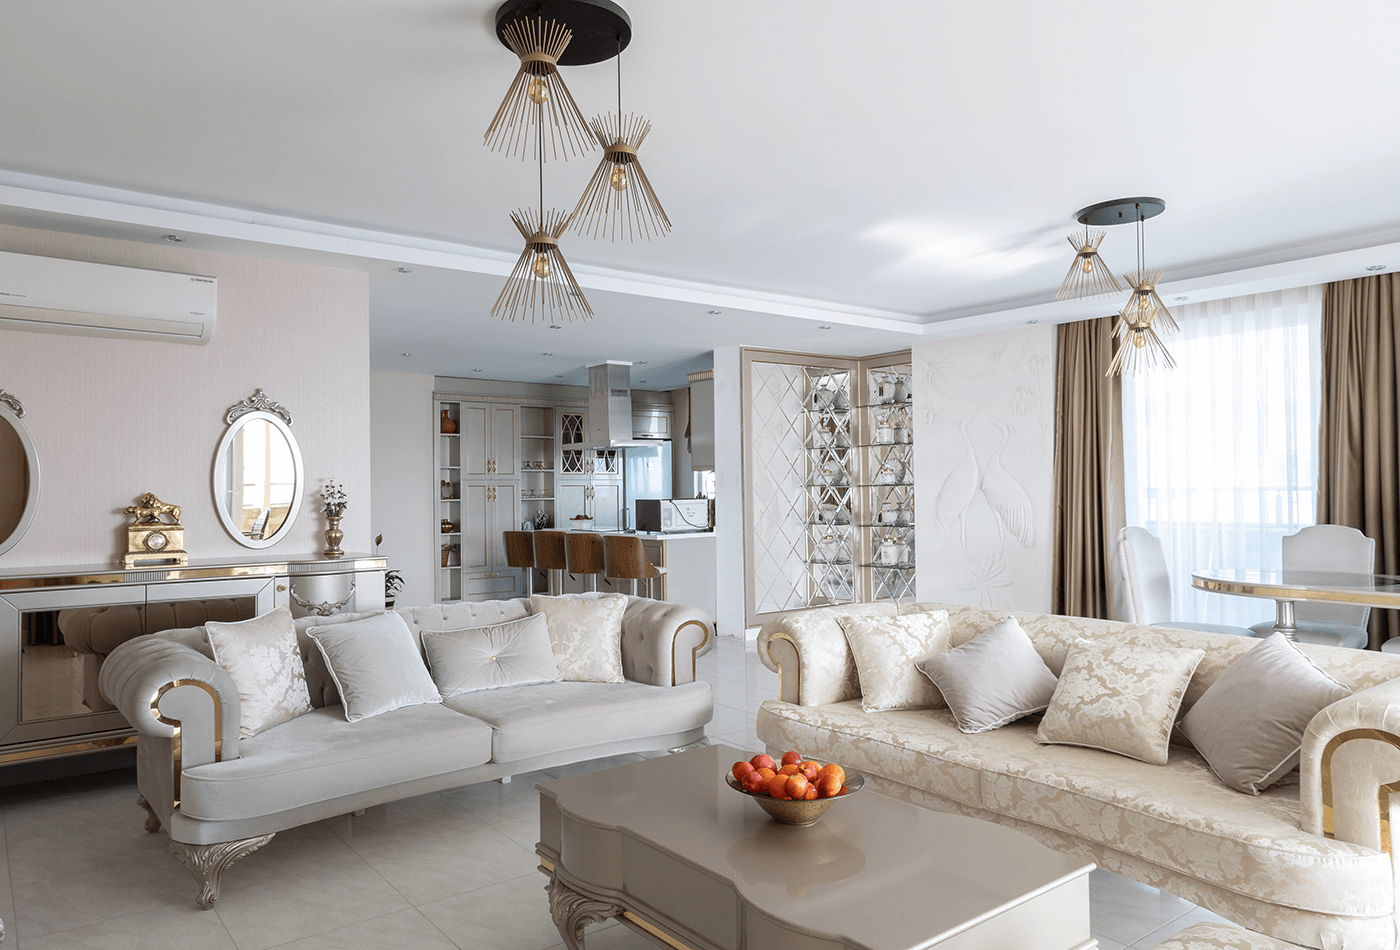 transitional living room designs